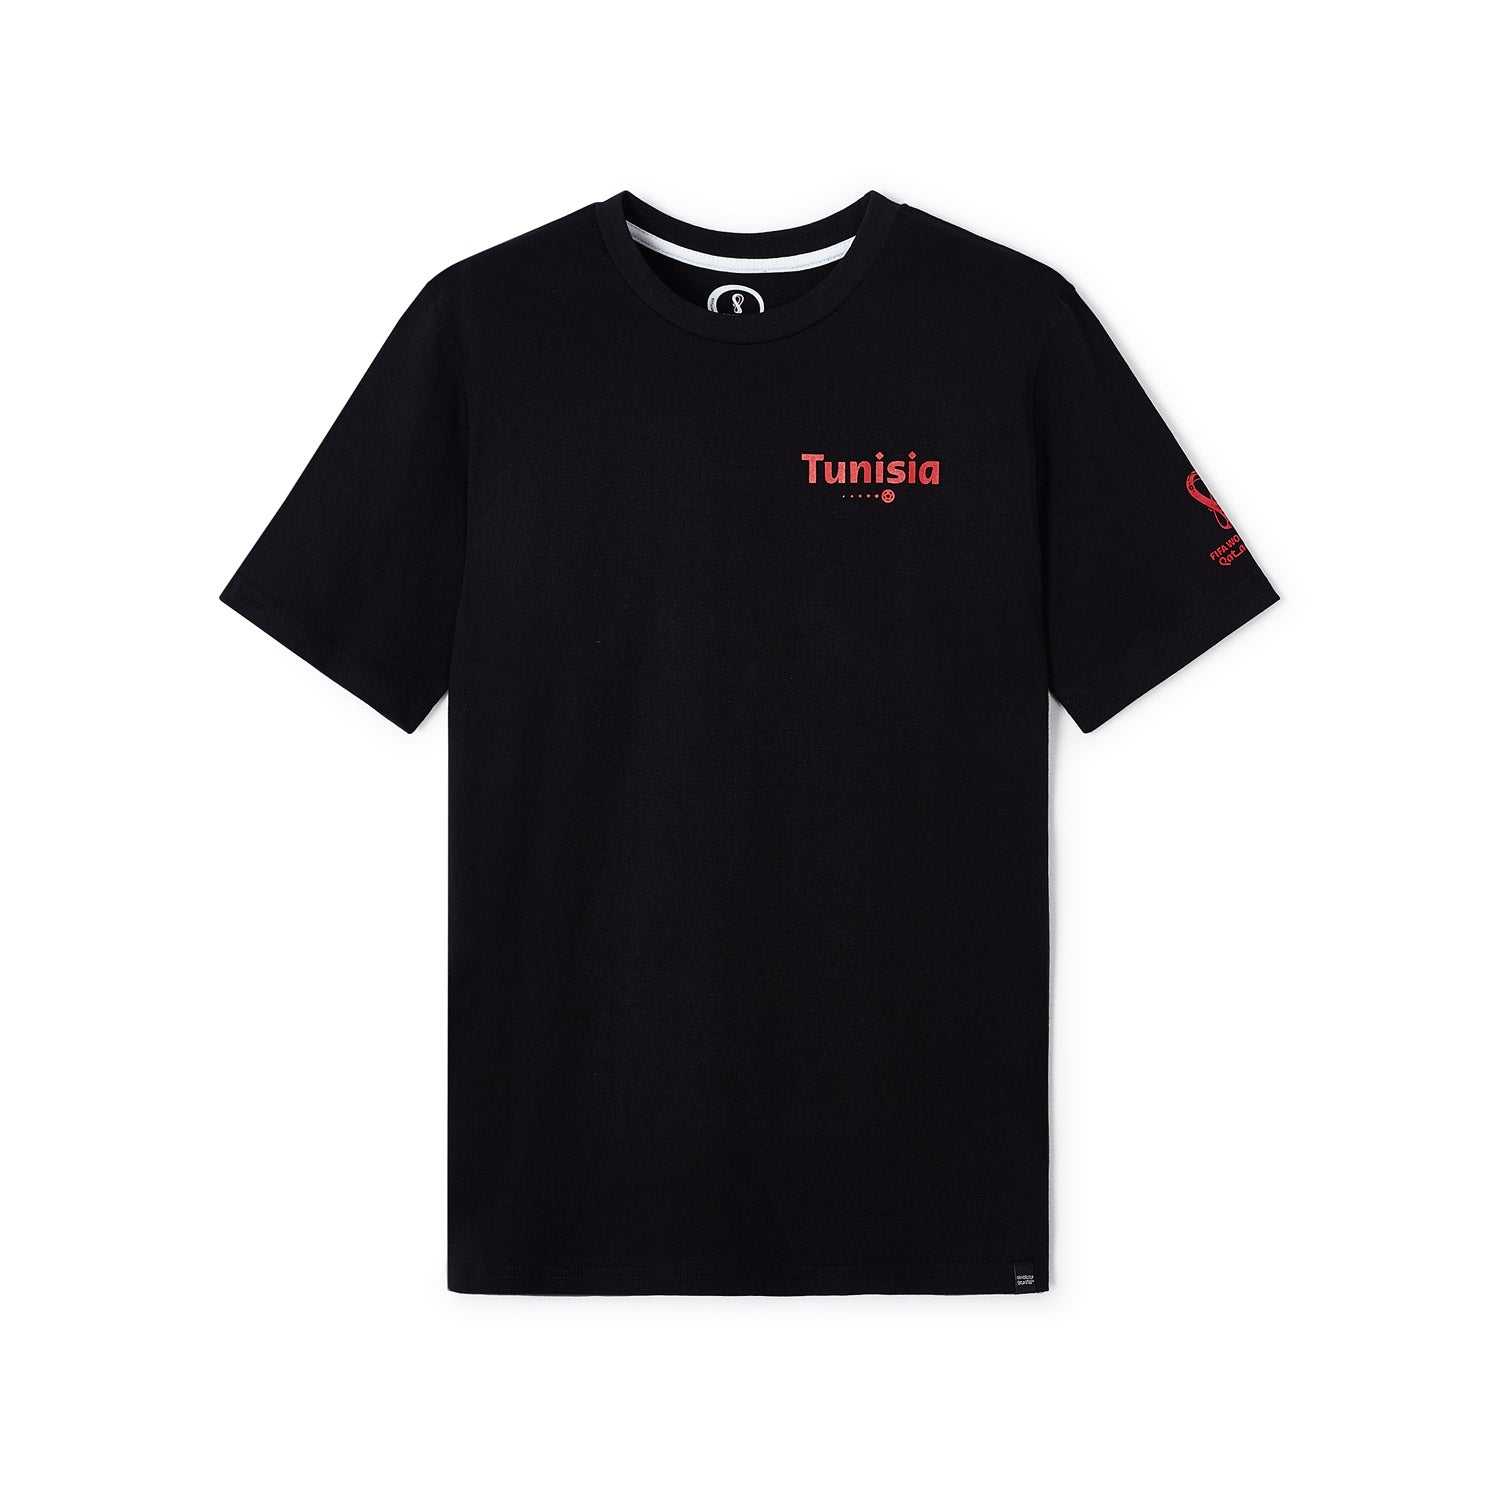 2022 World Cup Tunisia Black T-Shirt - Mens